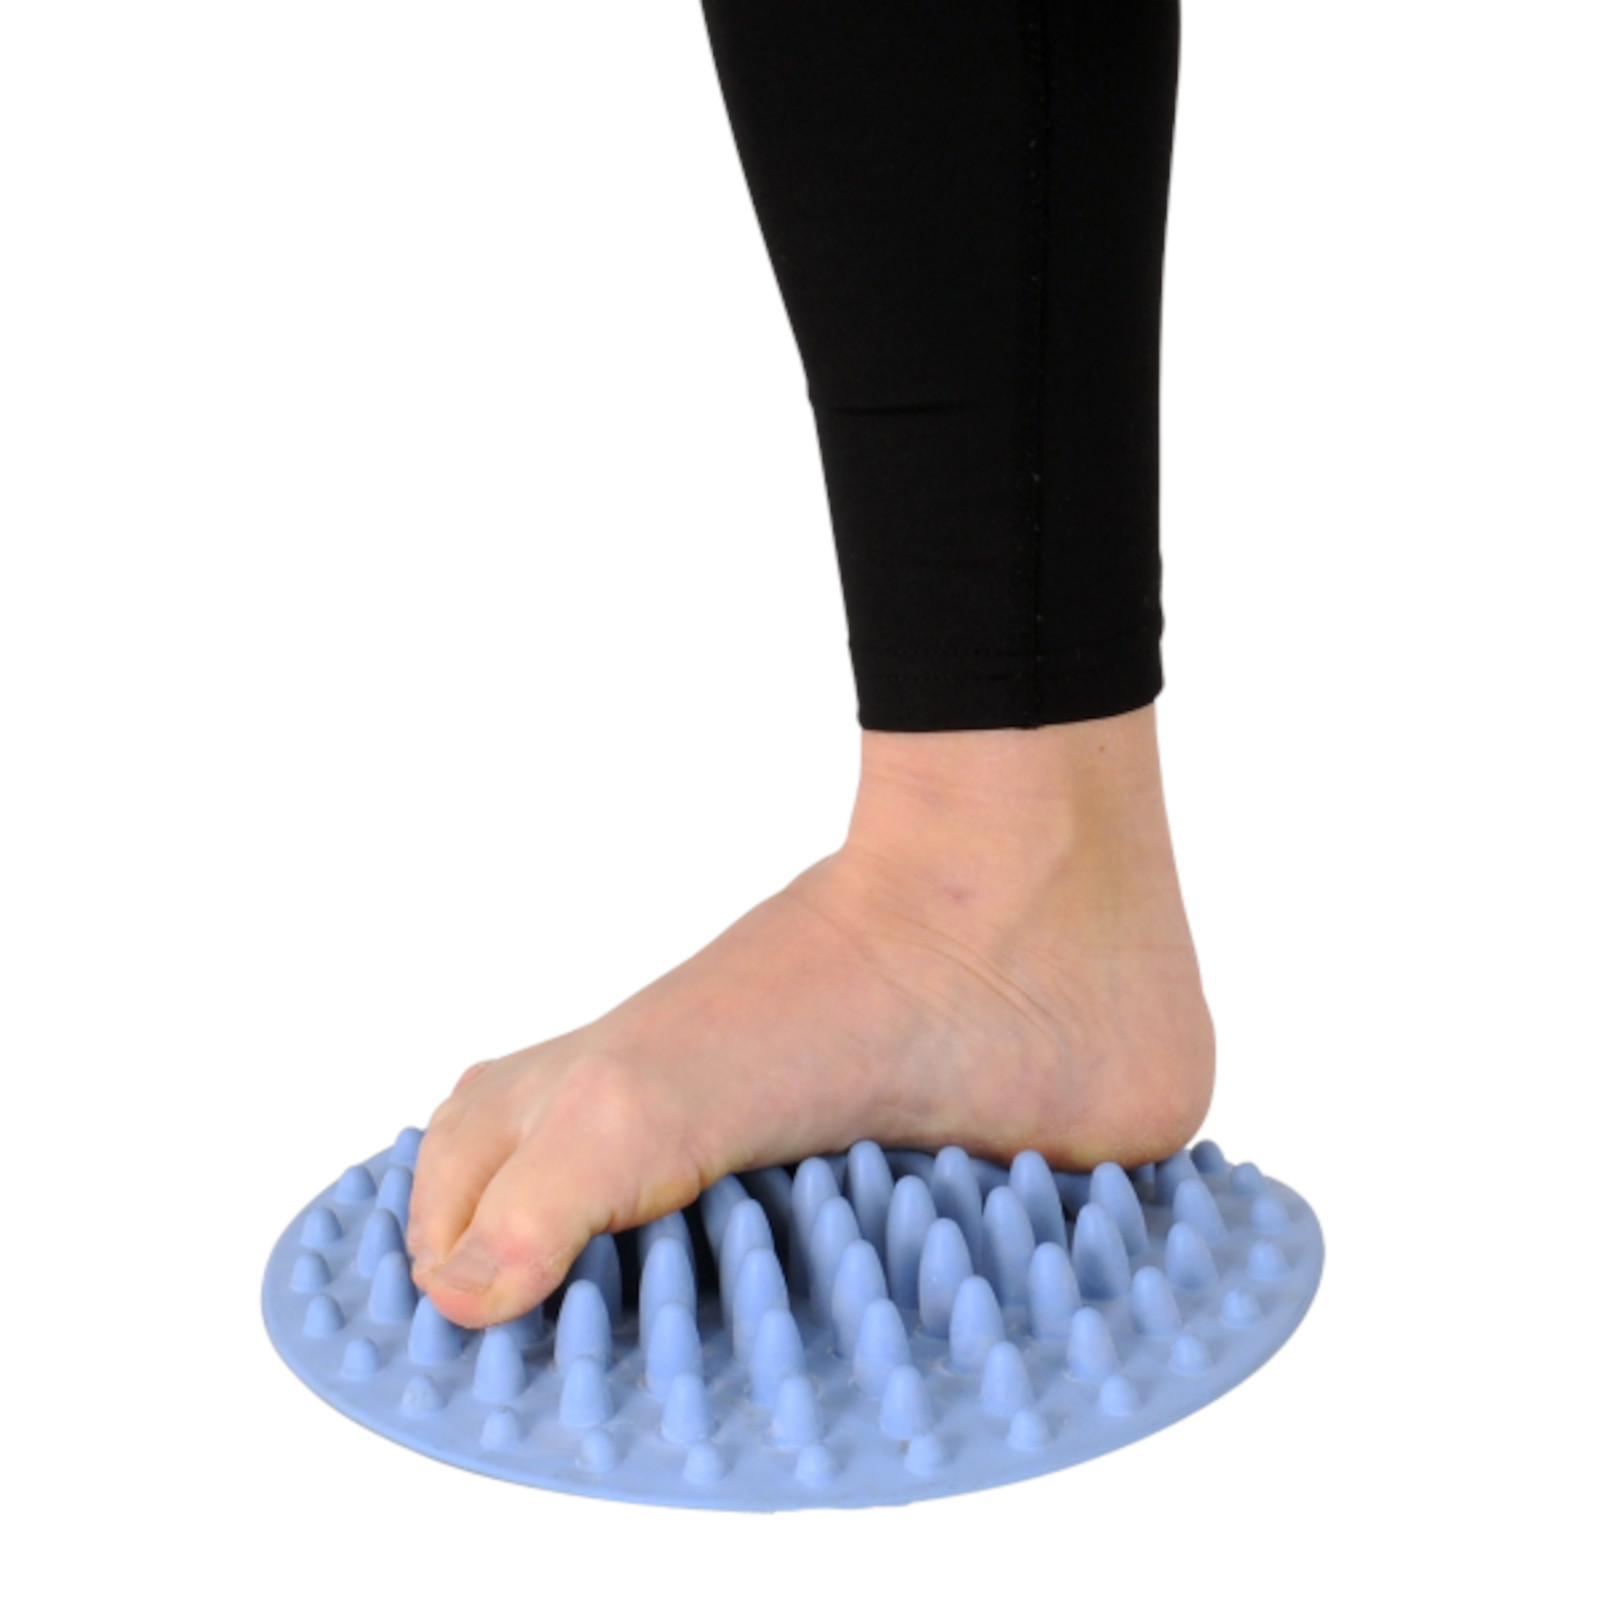 Pedalo foot massage regeneration mat - Fitshop